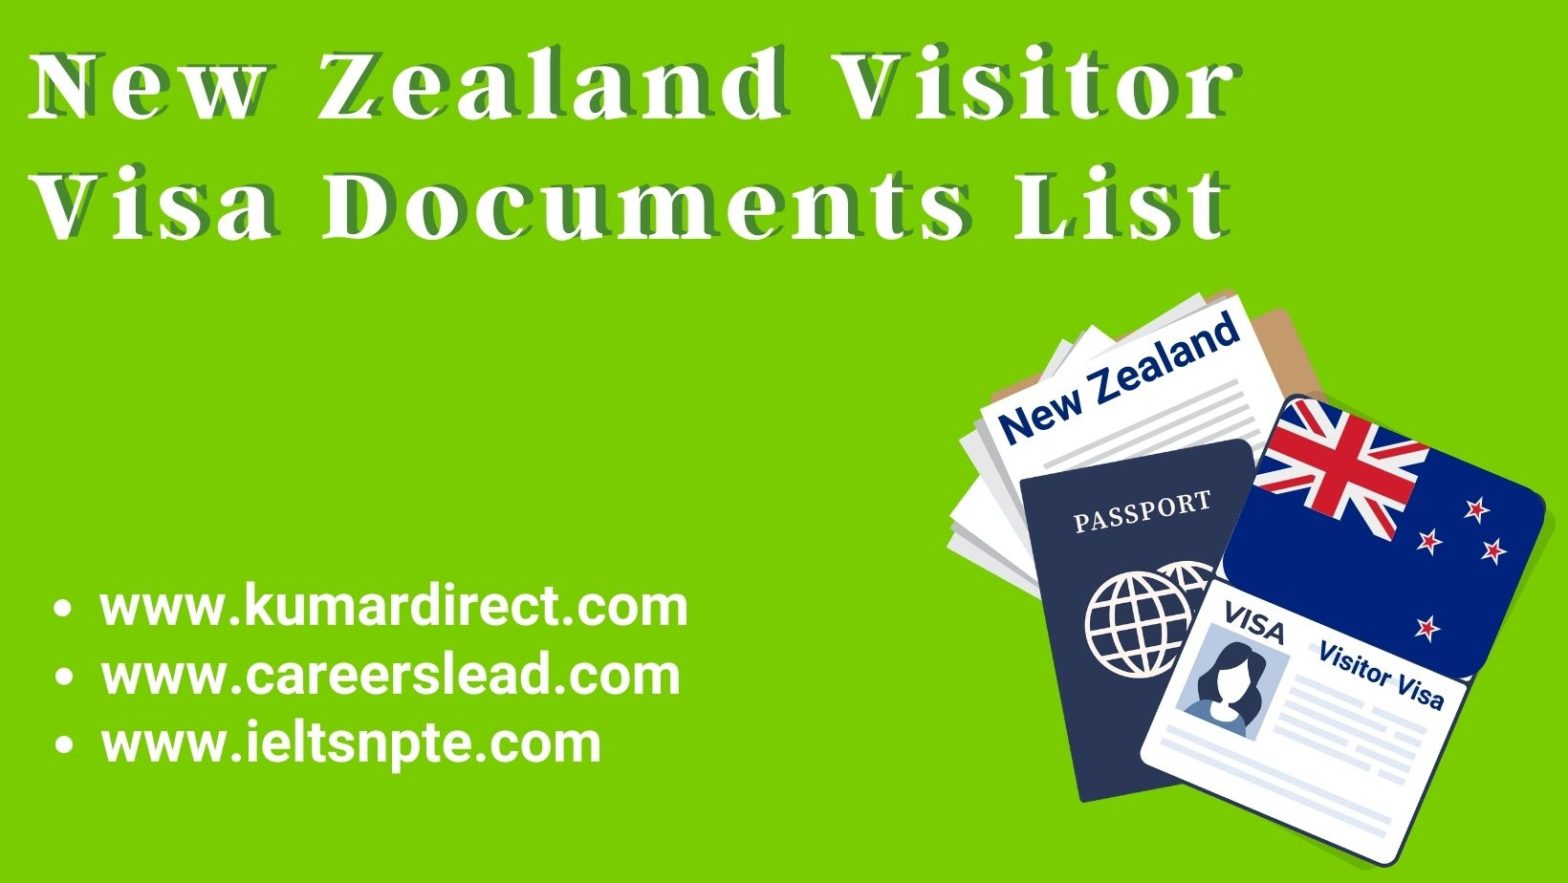 New Zealand Visitor Visa Documents List